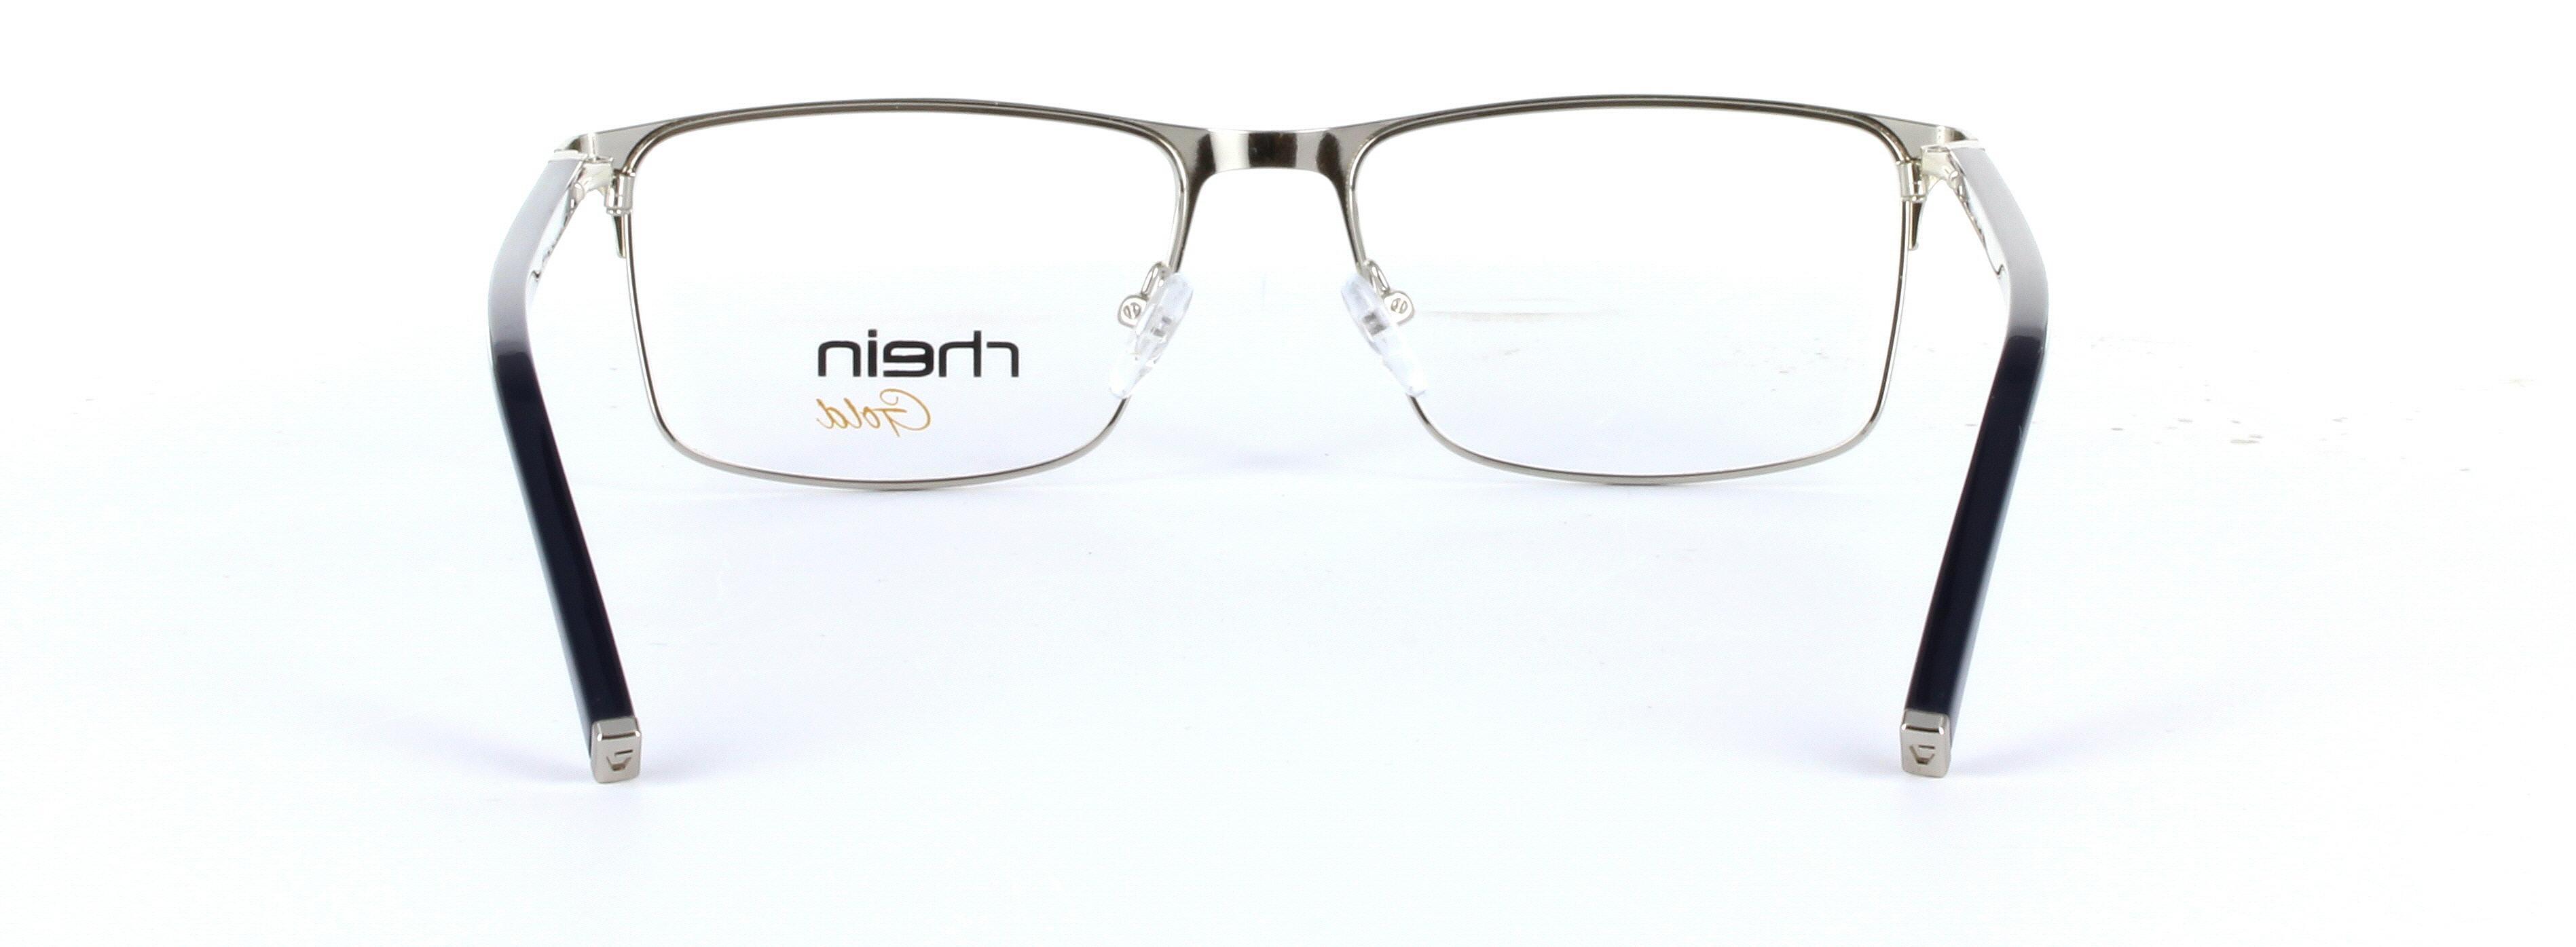 Faith Blue Full Rim Oval Rectangular Metal Glasses - Image View 3